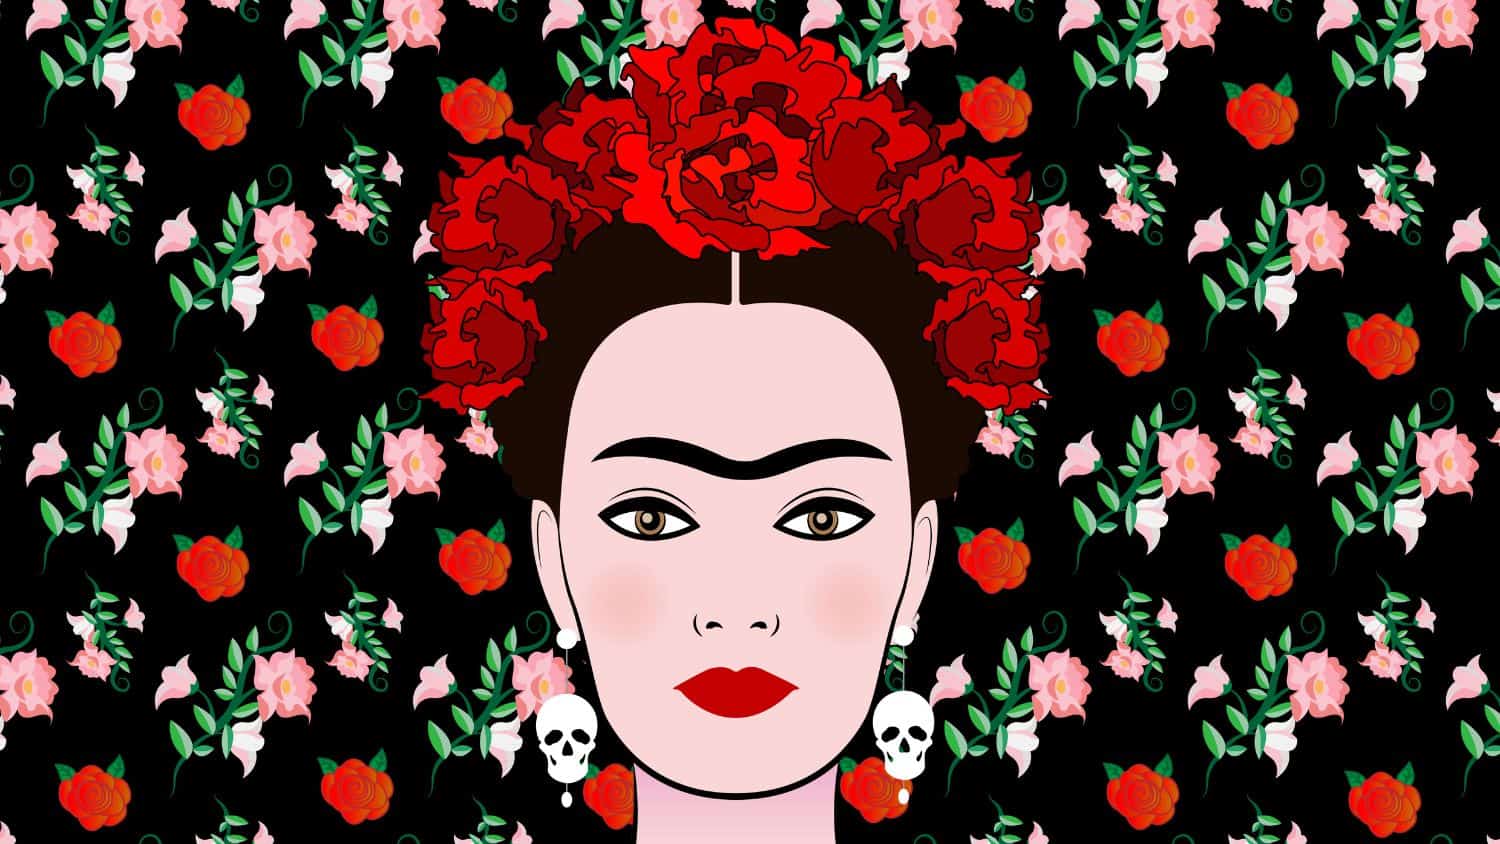 Illustrated portrait of Frida Kahlo